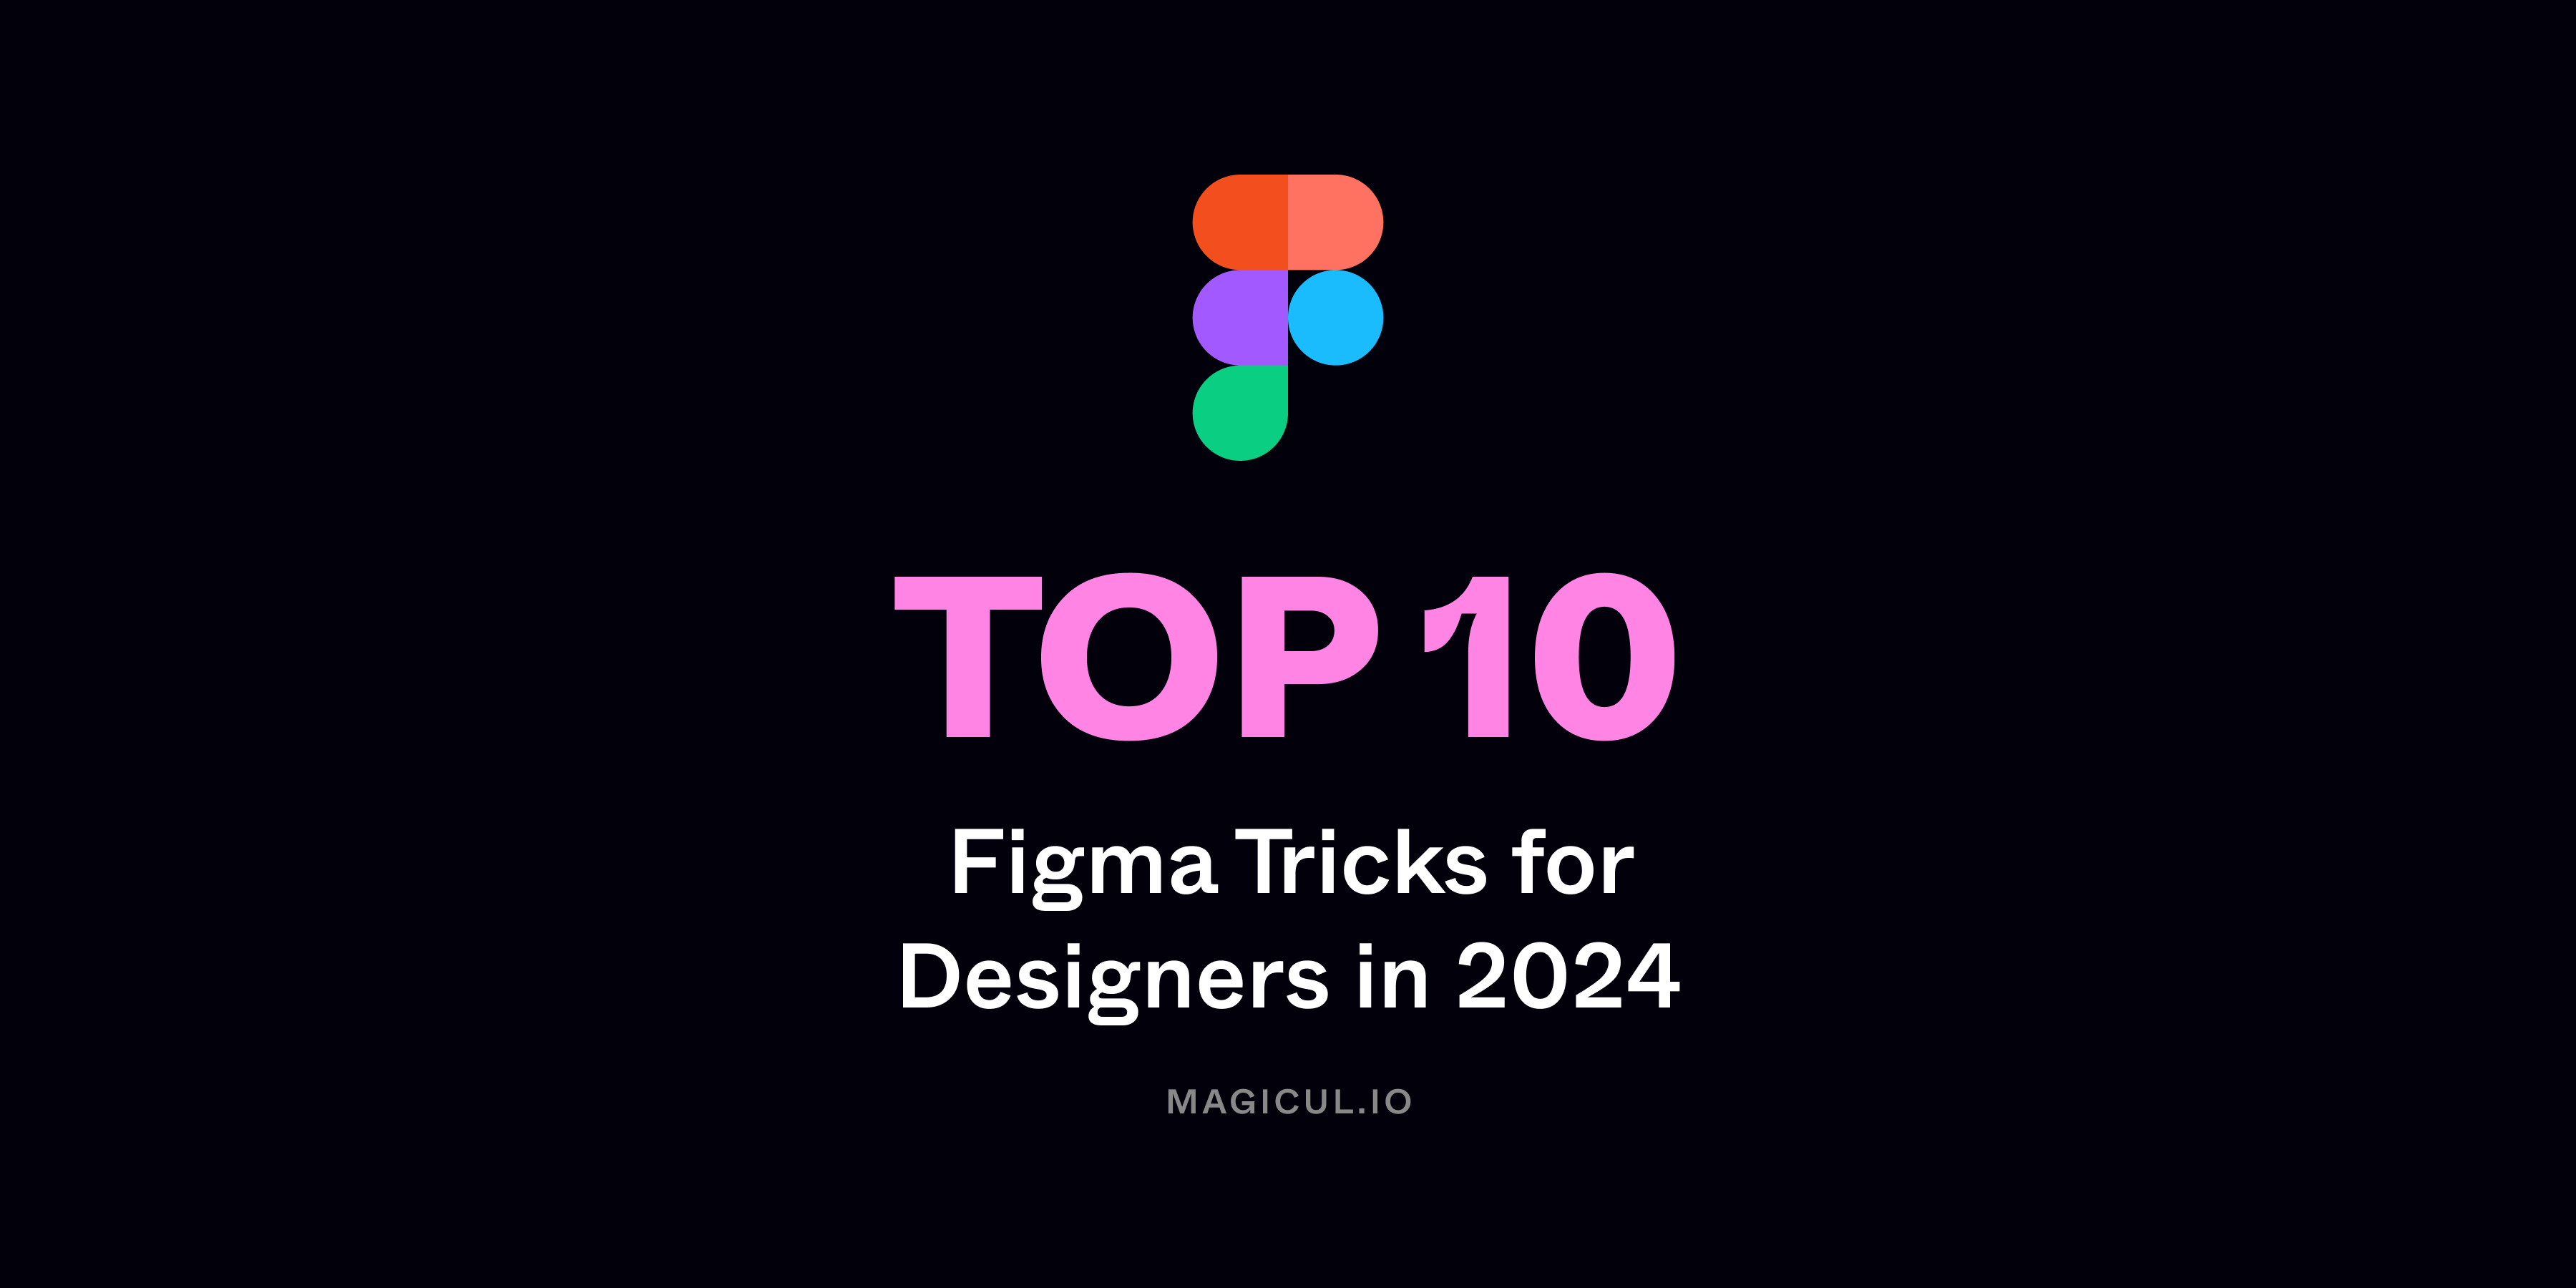 10 Figma Tricks for Designers in 2024